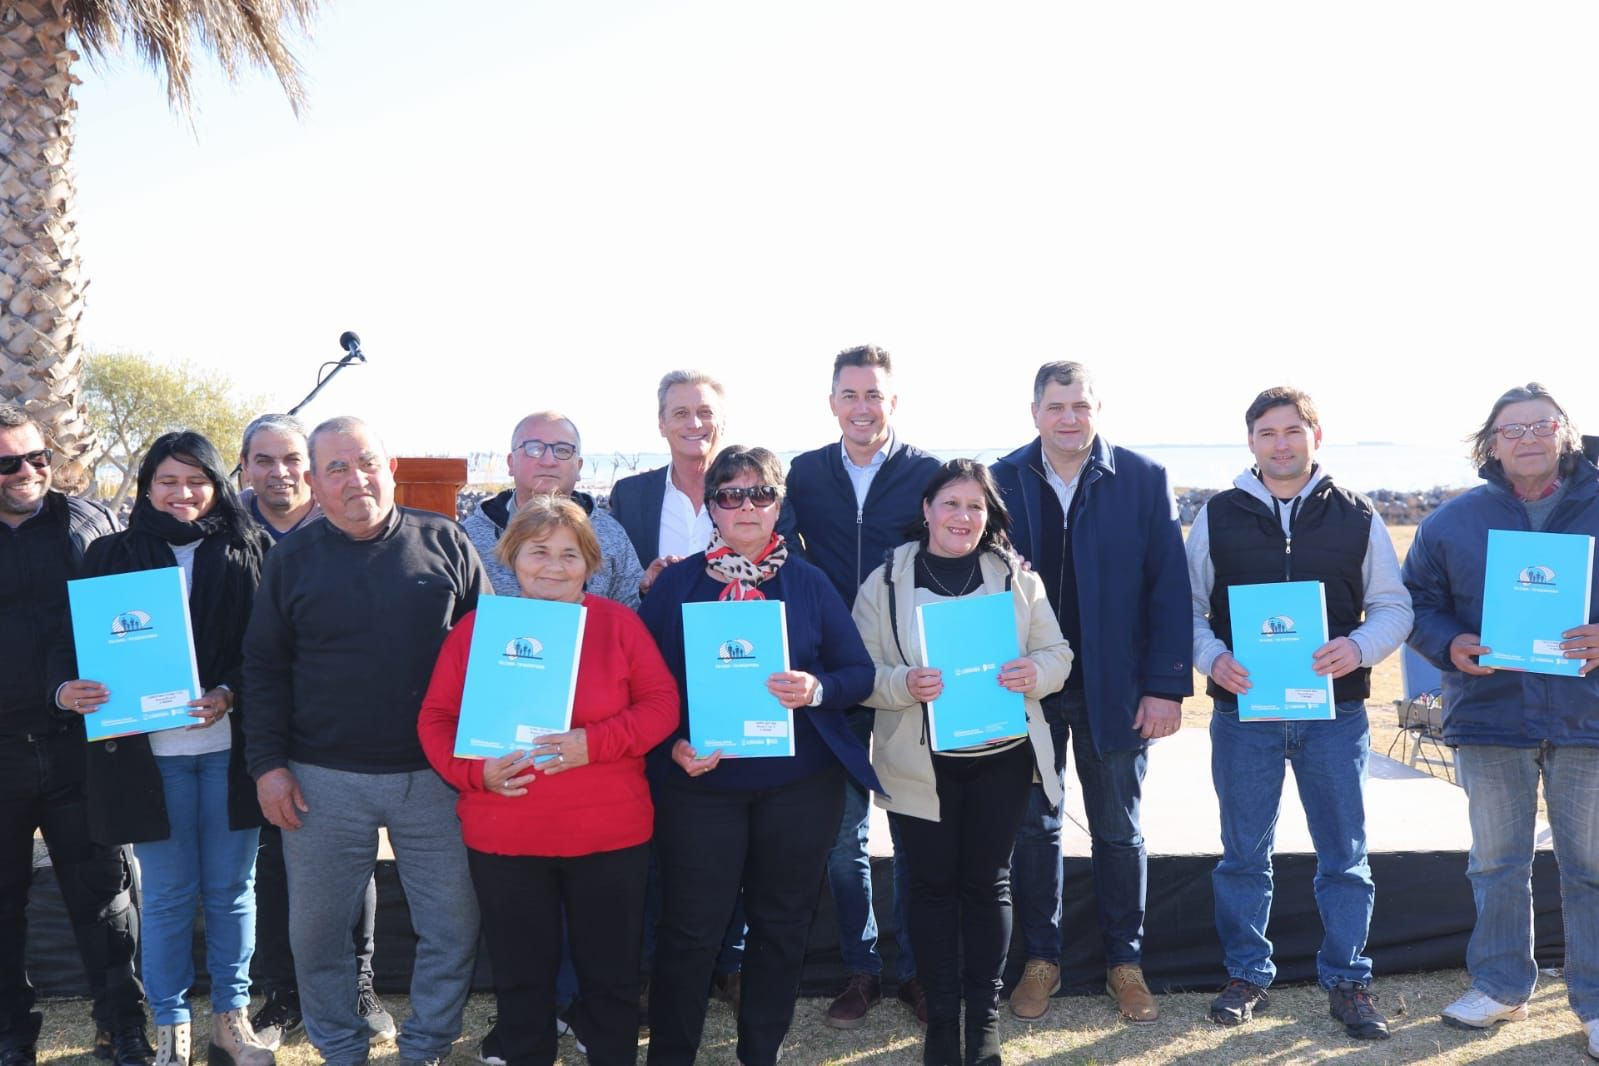 Manuel Calvo announced the tender for the Miramar de Ansenuza sewage treatment project • Channel C